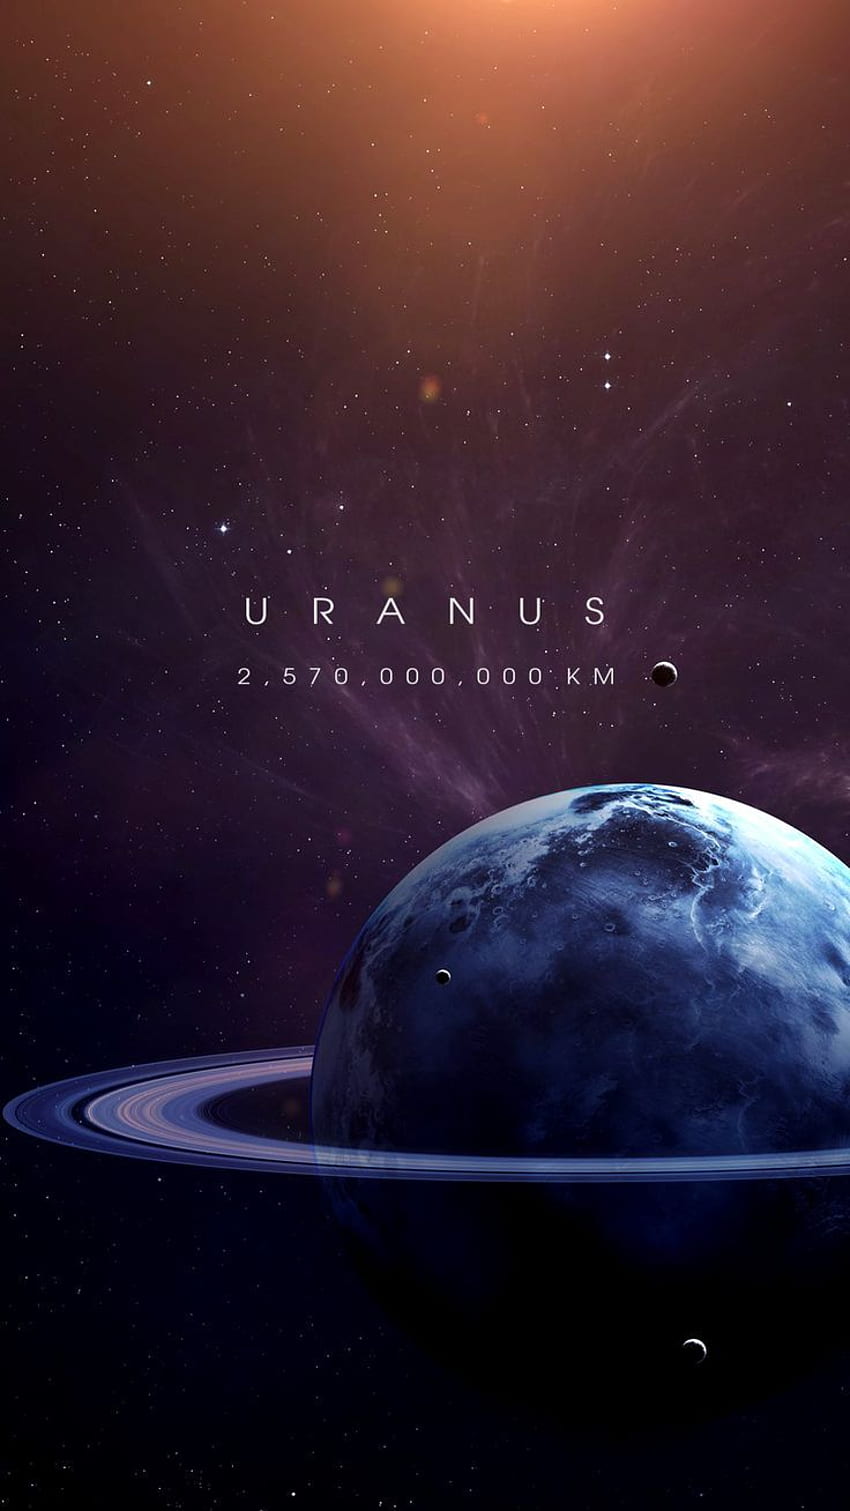 10300 Uranus Stock Photos Pictures  RoyaltyFree Images  iStock   Planet uranus Uranus isolated Uranus mythology